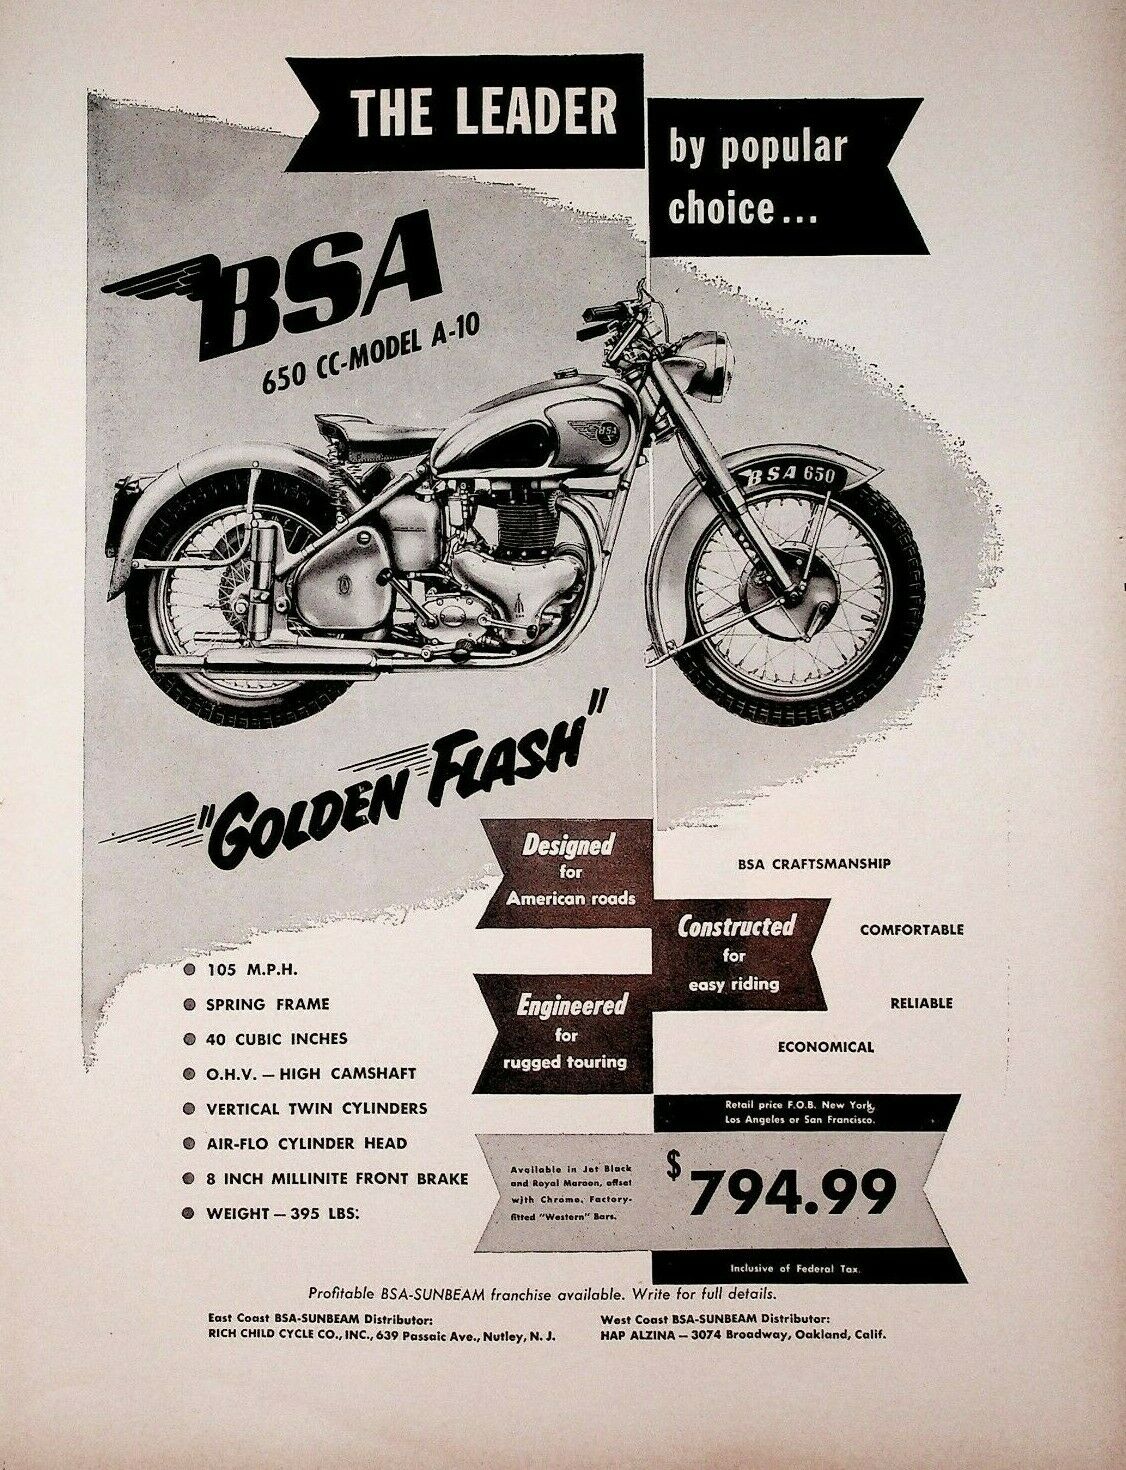 1951 Bsa Golden Flash 650cc Model A-10 - Vintage Motorcycle Ad